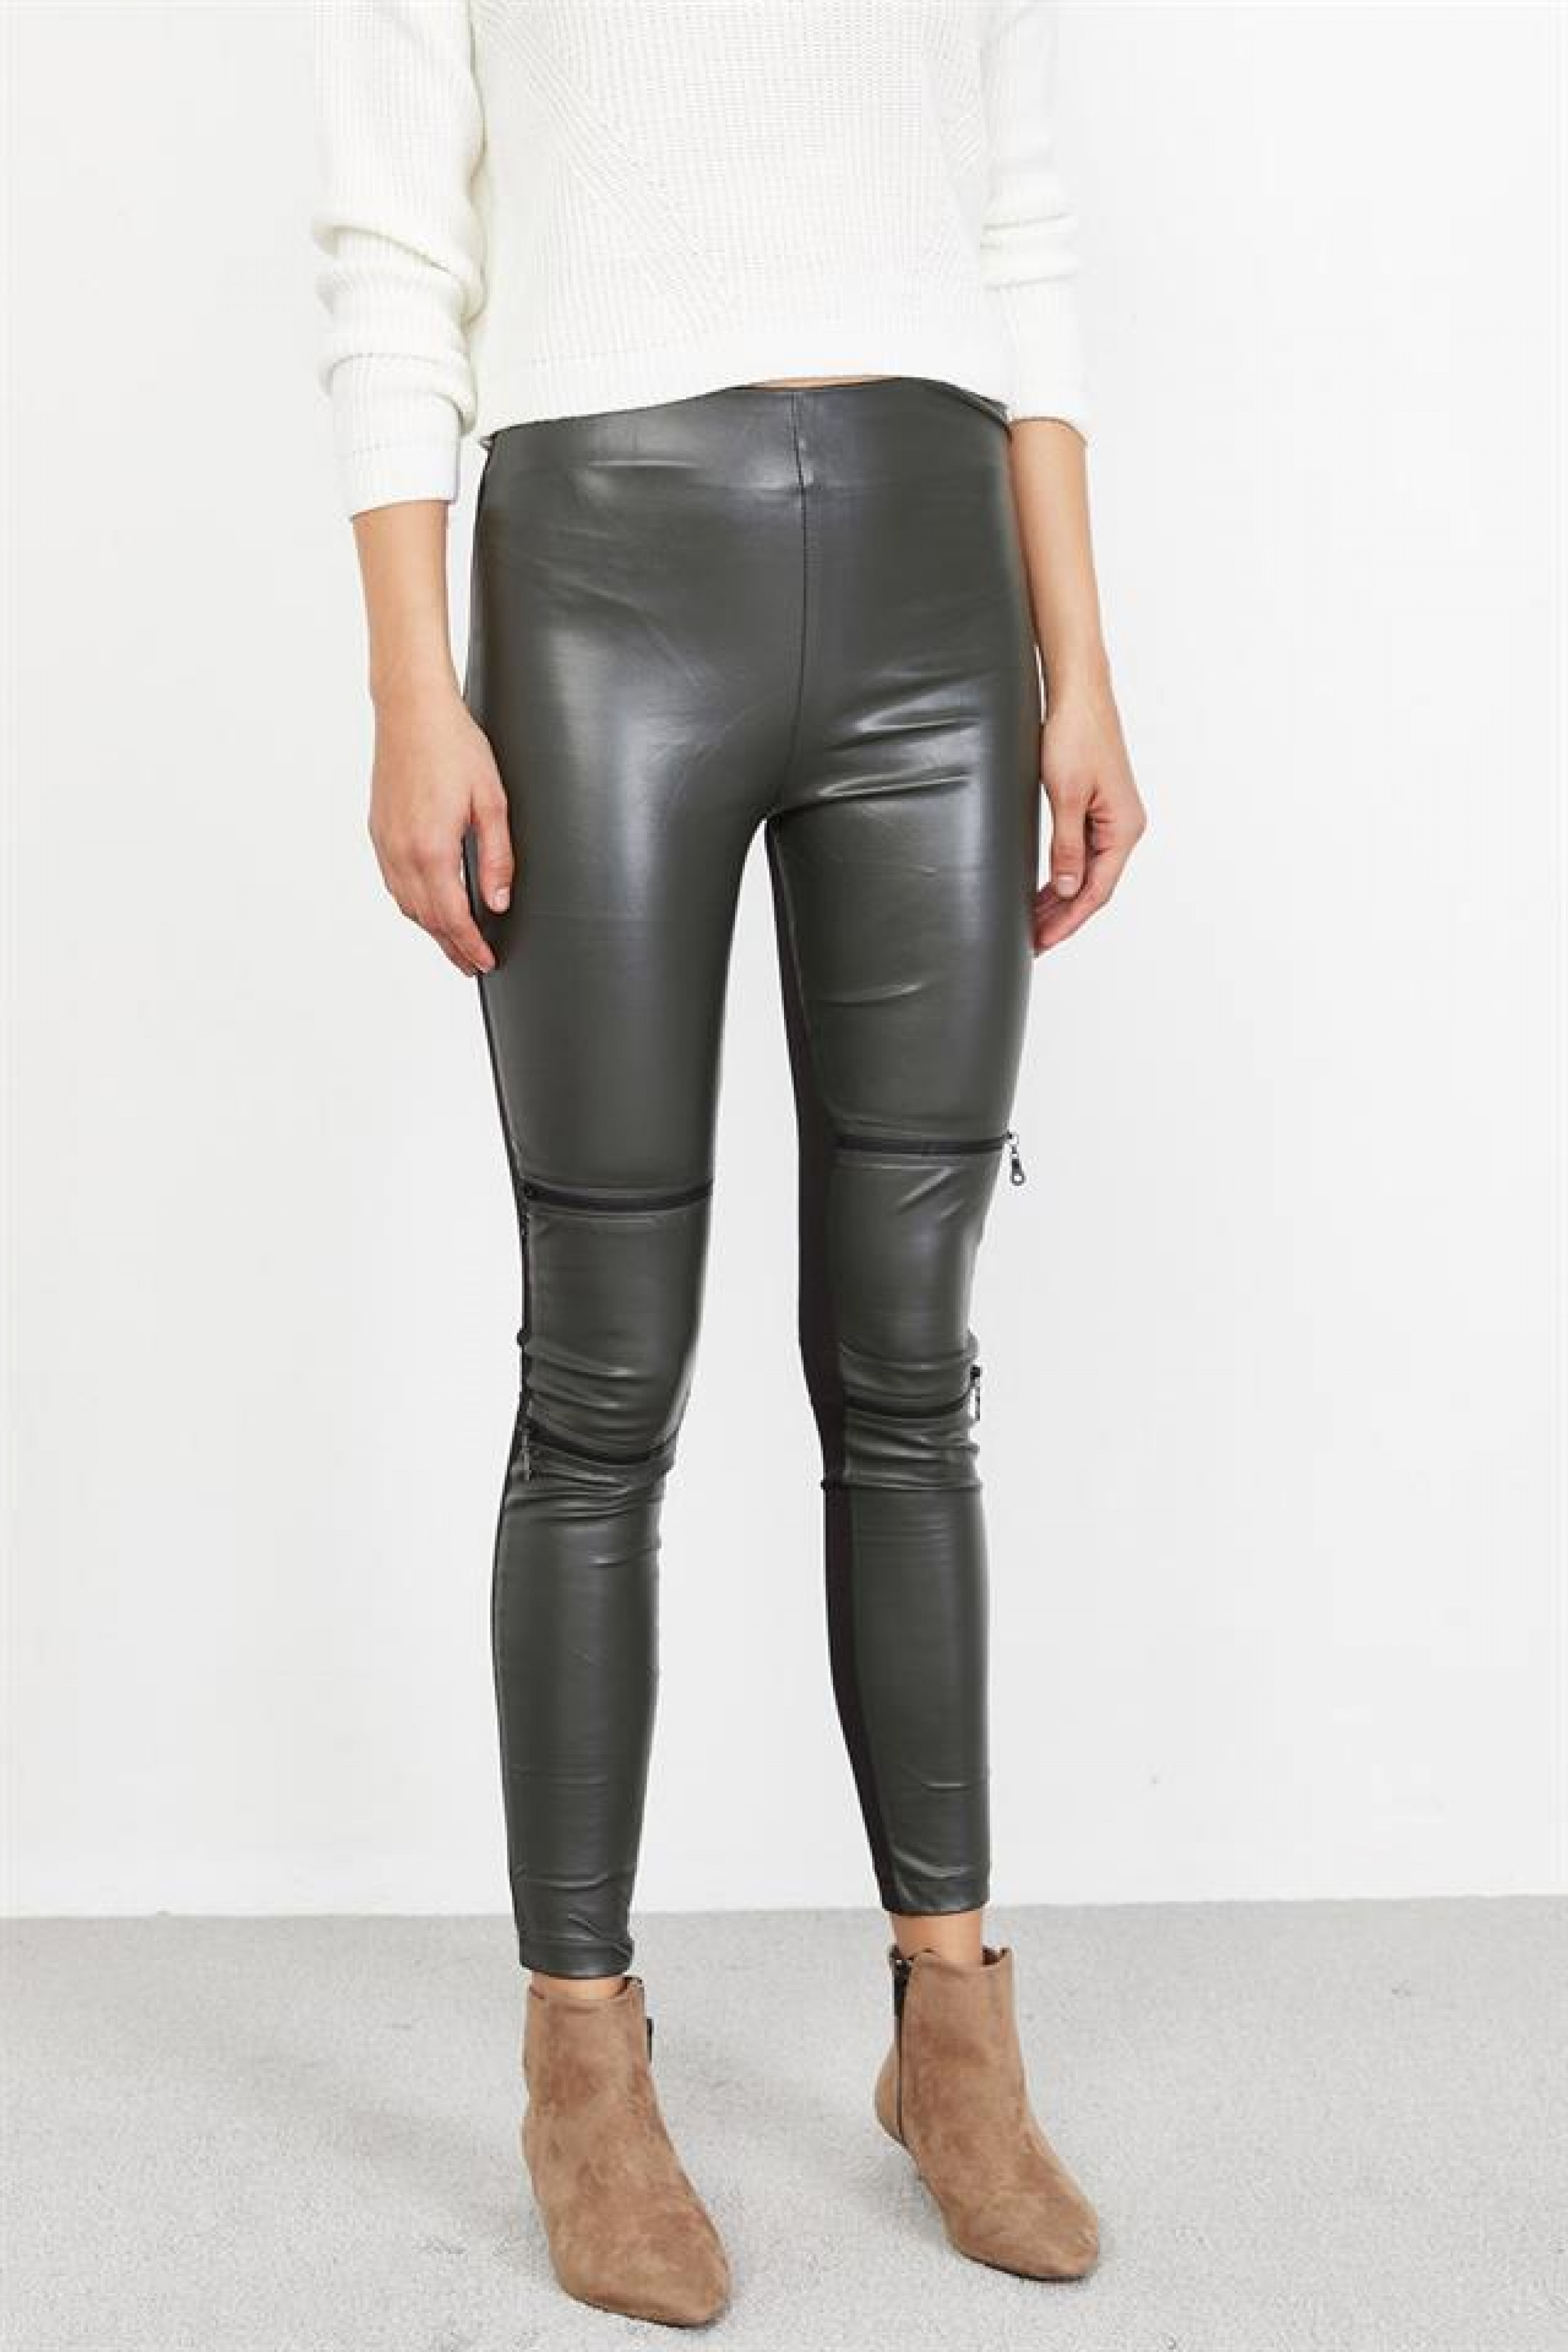 Khaki Leather Leggings H&m  International Society of Precision